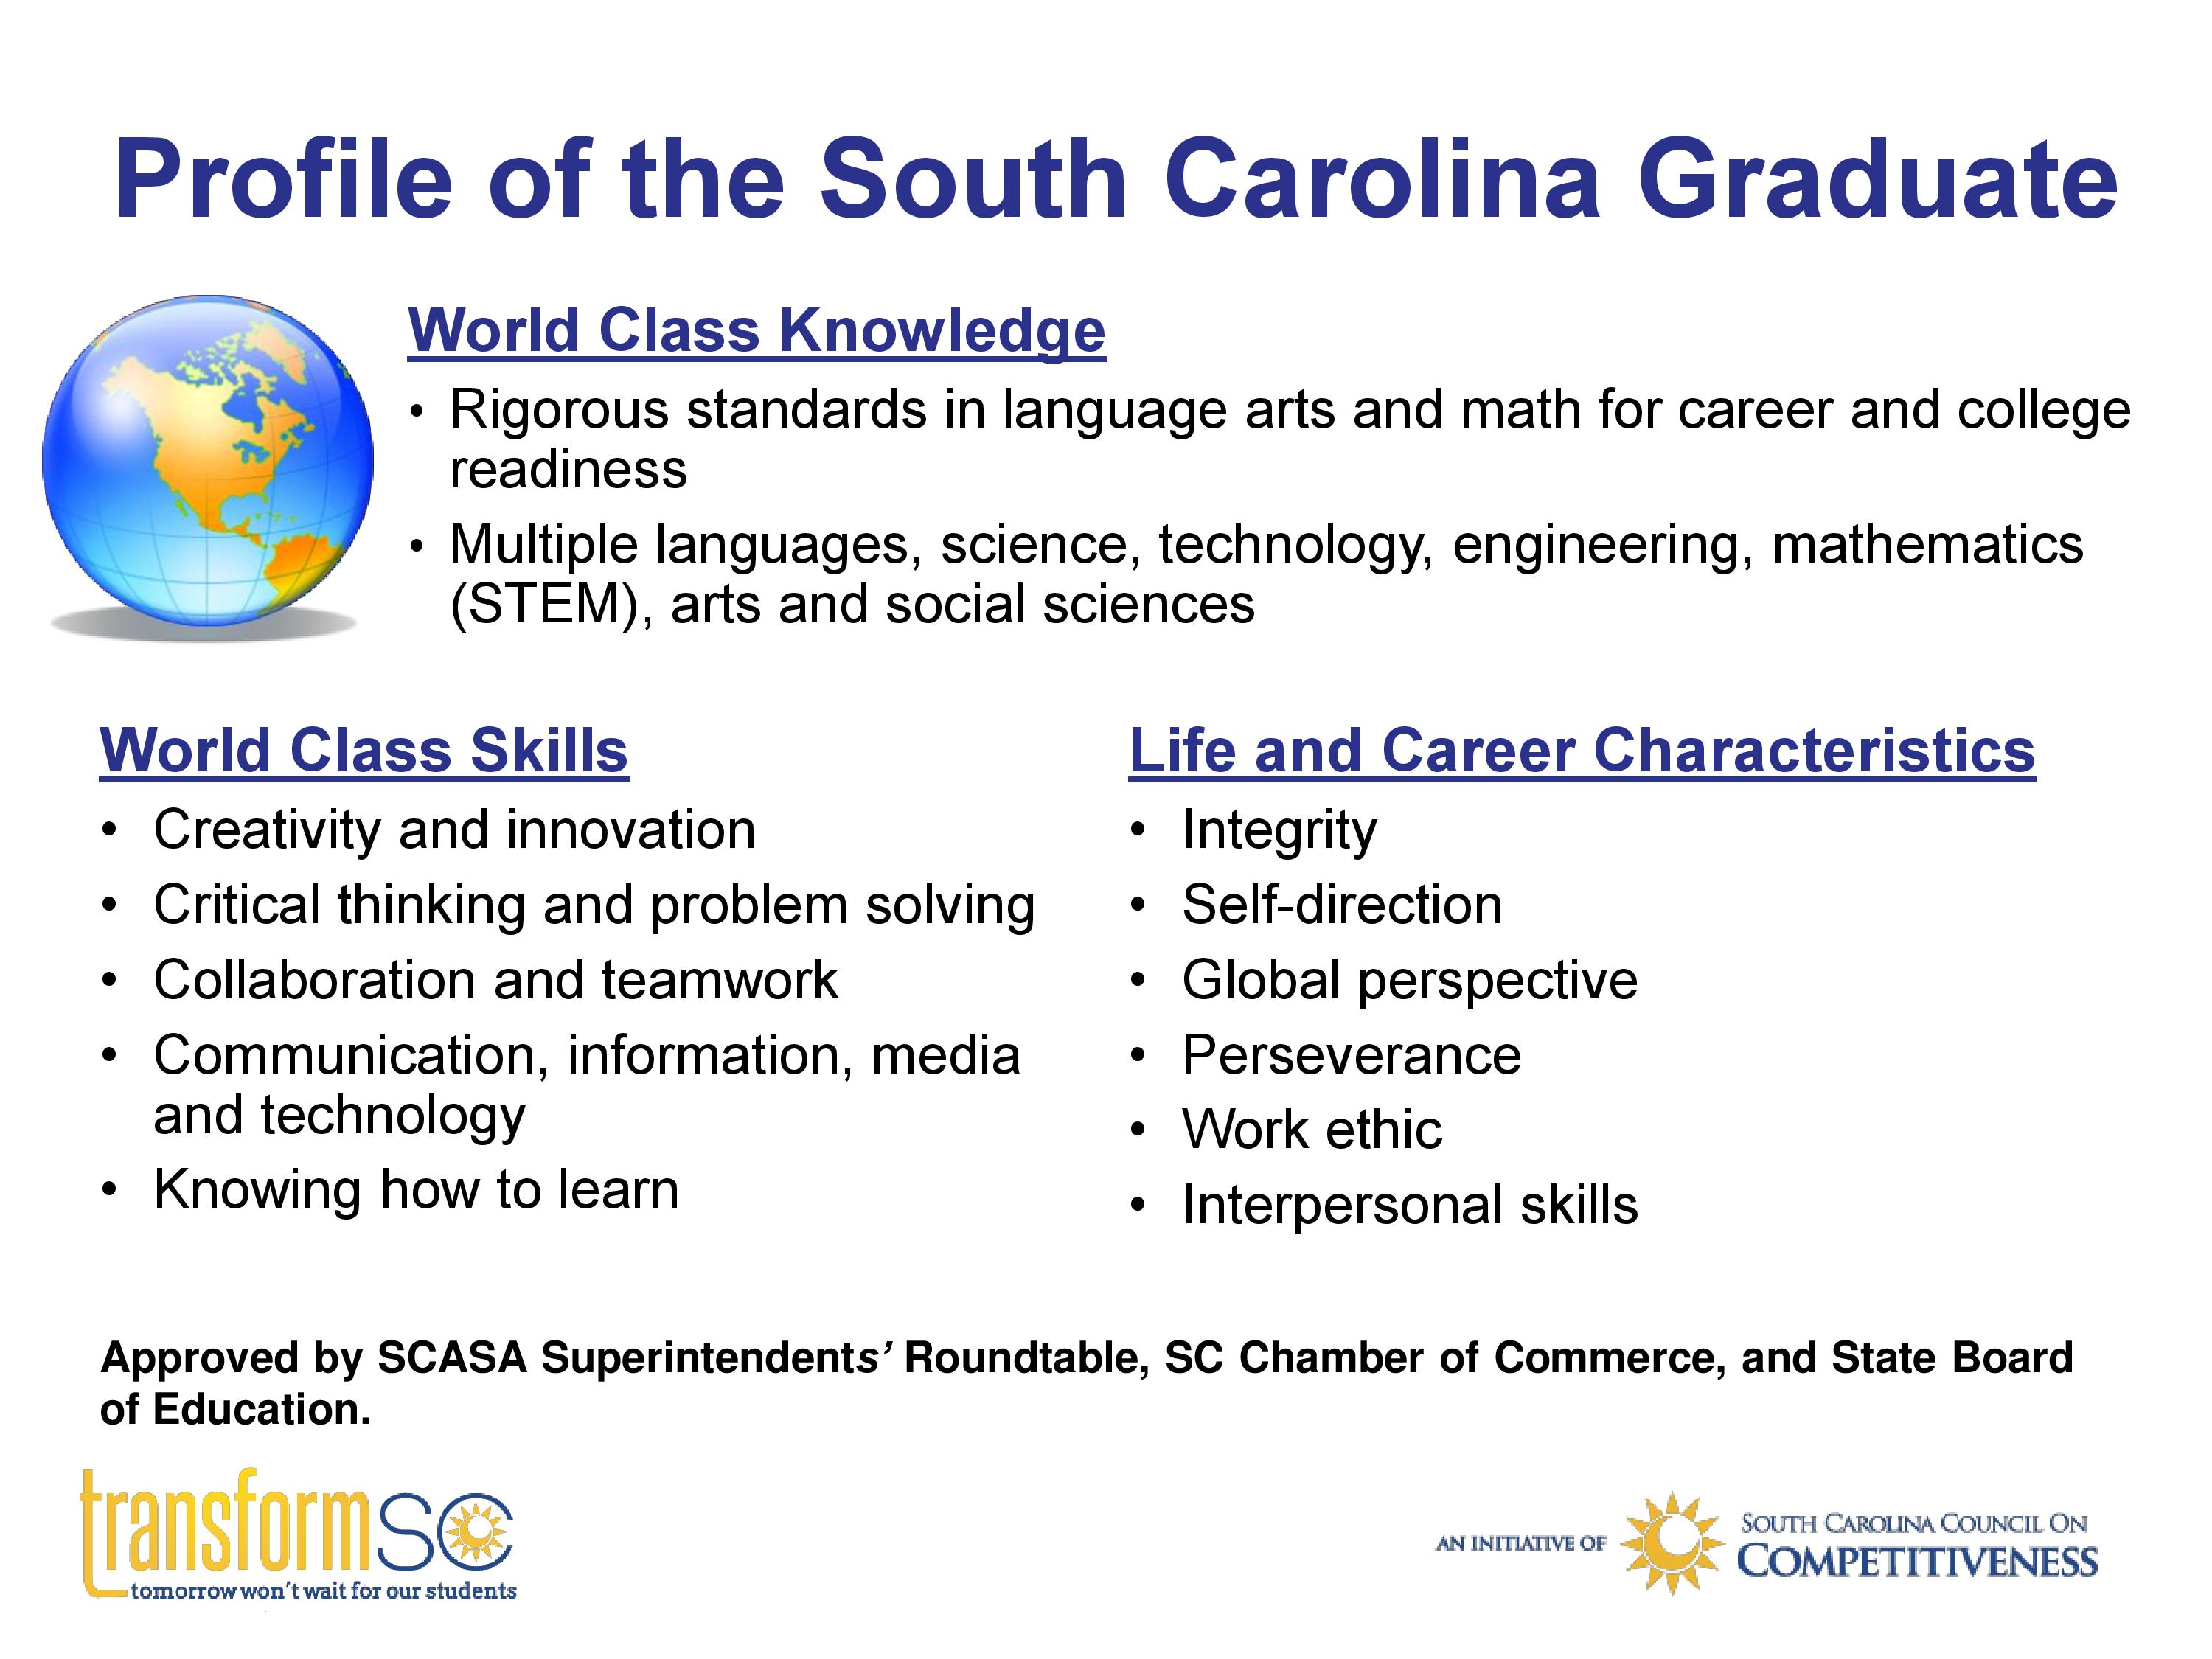 Profile of the South Carolina Graduate: Wold Class Knowledge, World Class Skills, Life and Career Characteristics